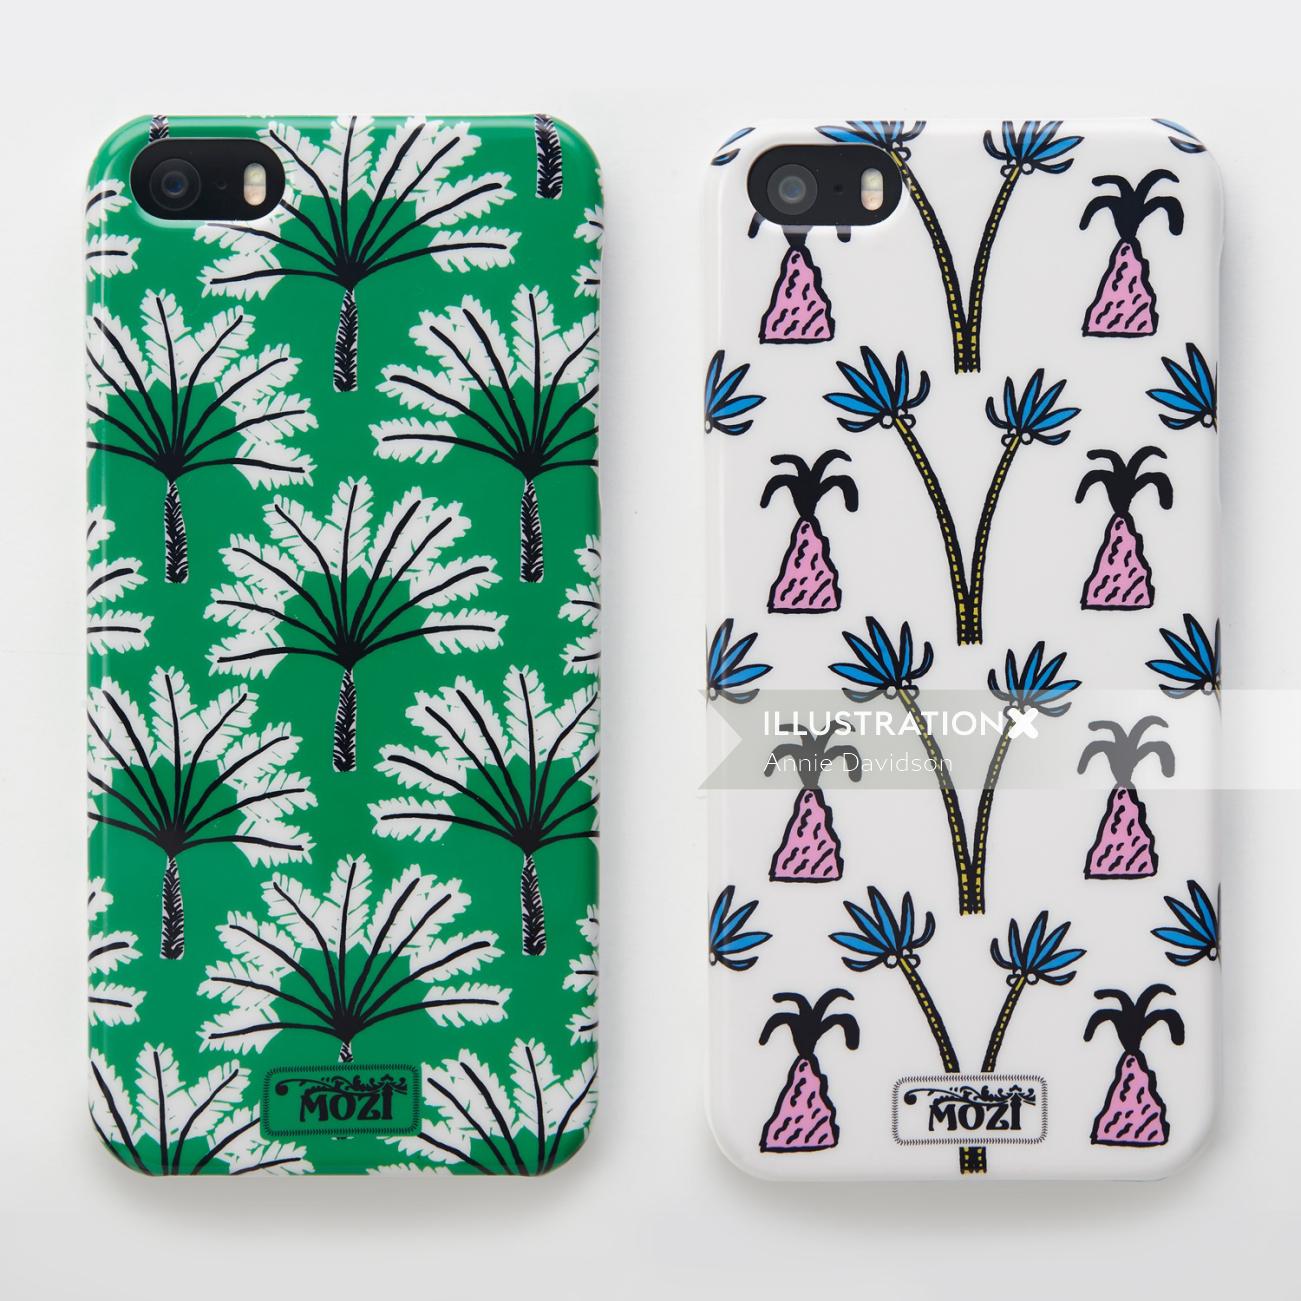 Africa iphone cases design by Annie Davidson